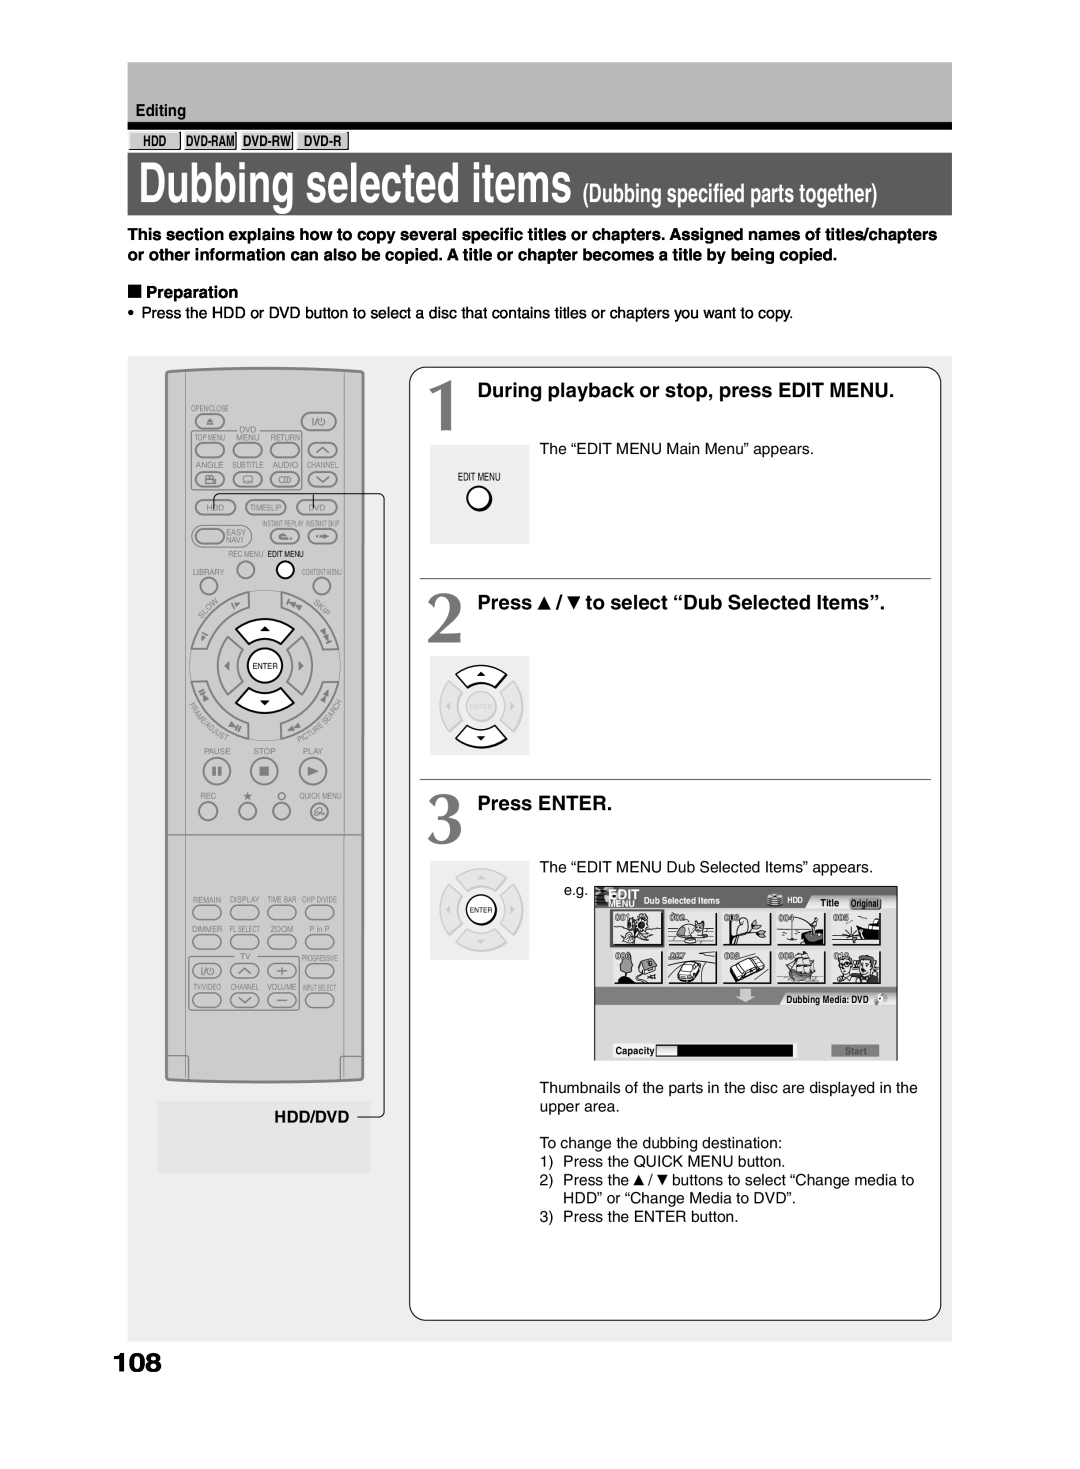 Toshiba RD-XS32SC During playback or stop, press EDIT MENU, Press / to select “Dub Selected Items”, Press ENTER, Hdd/Dvd 